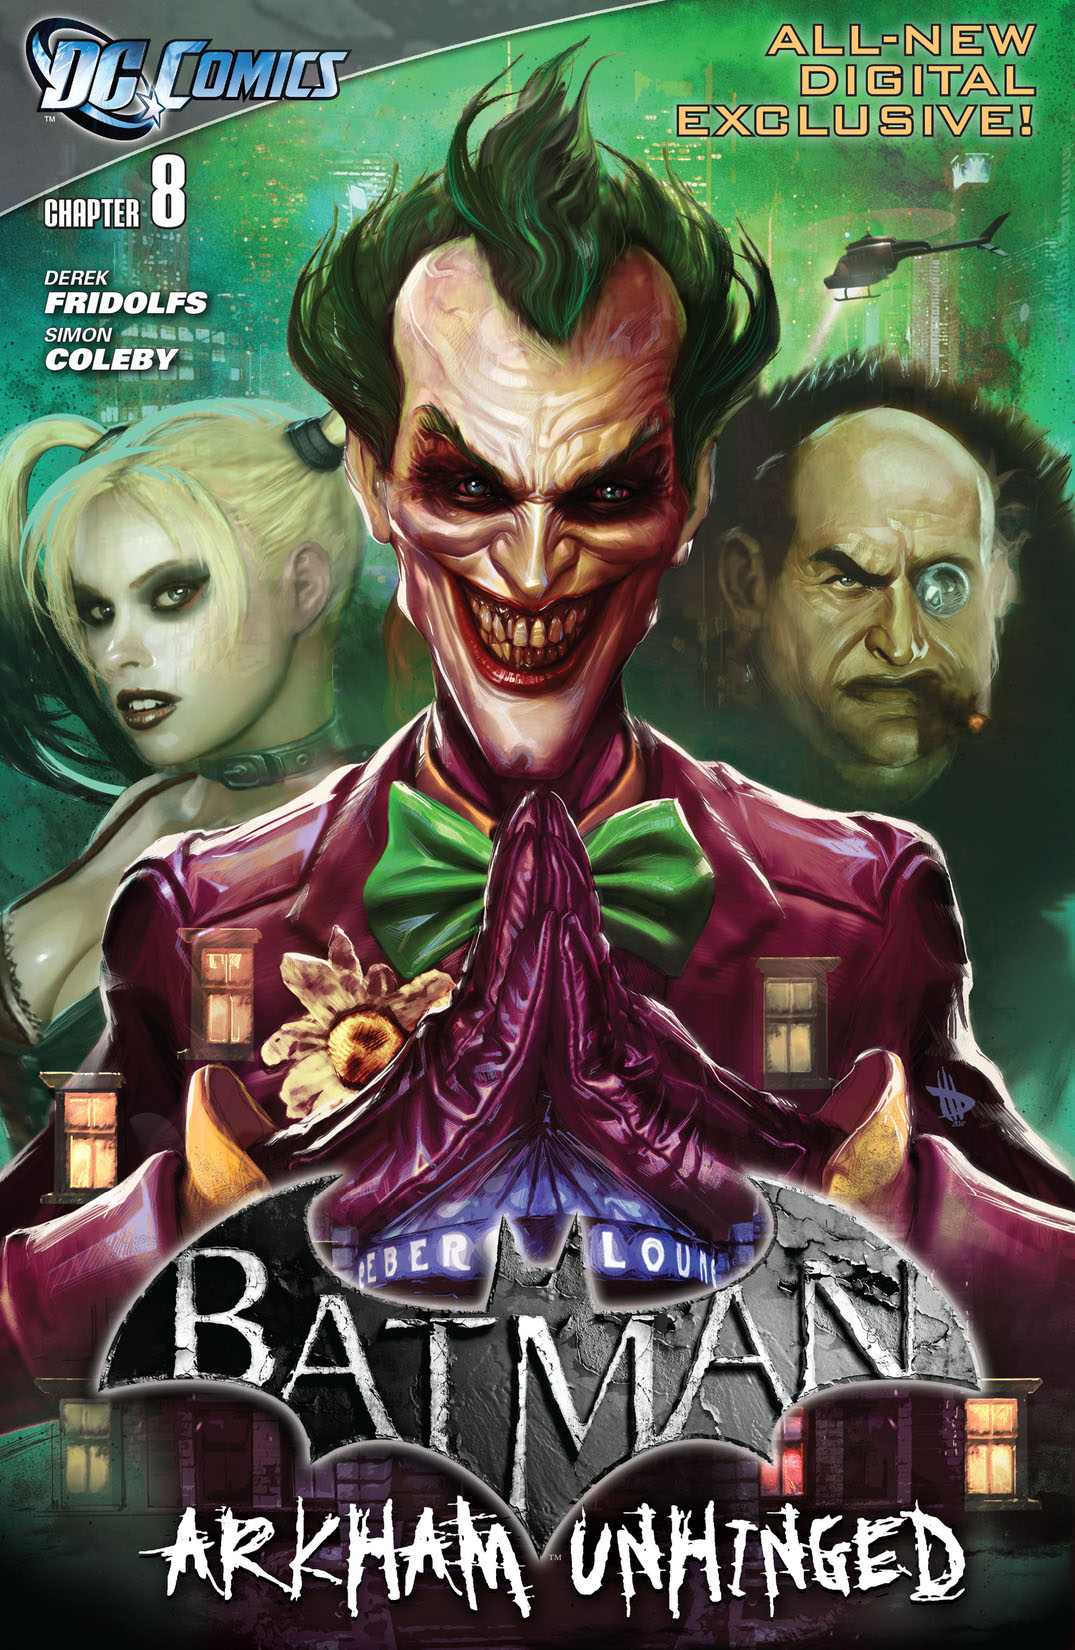 Batman: Arkham Unhinged #8 preview images